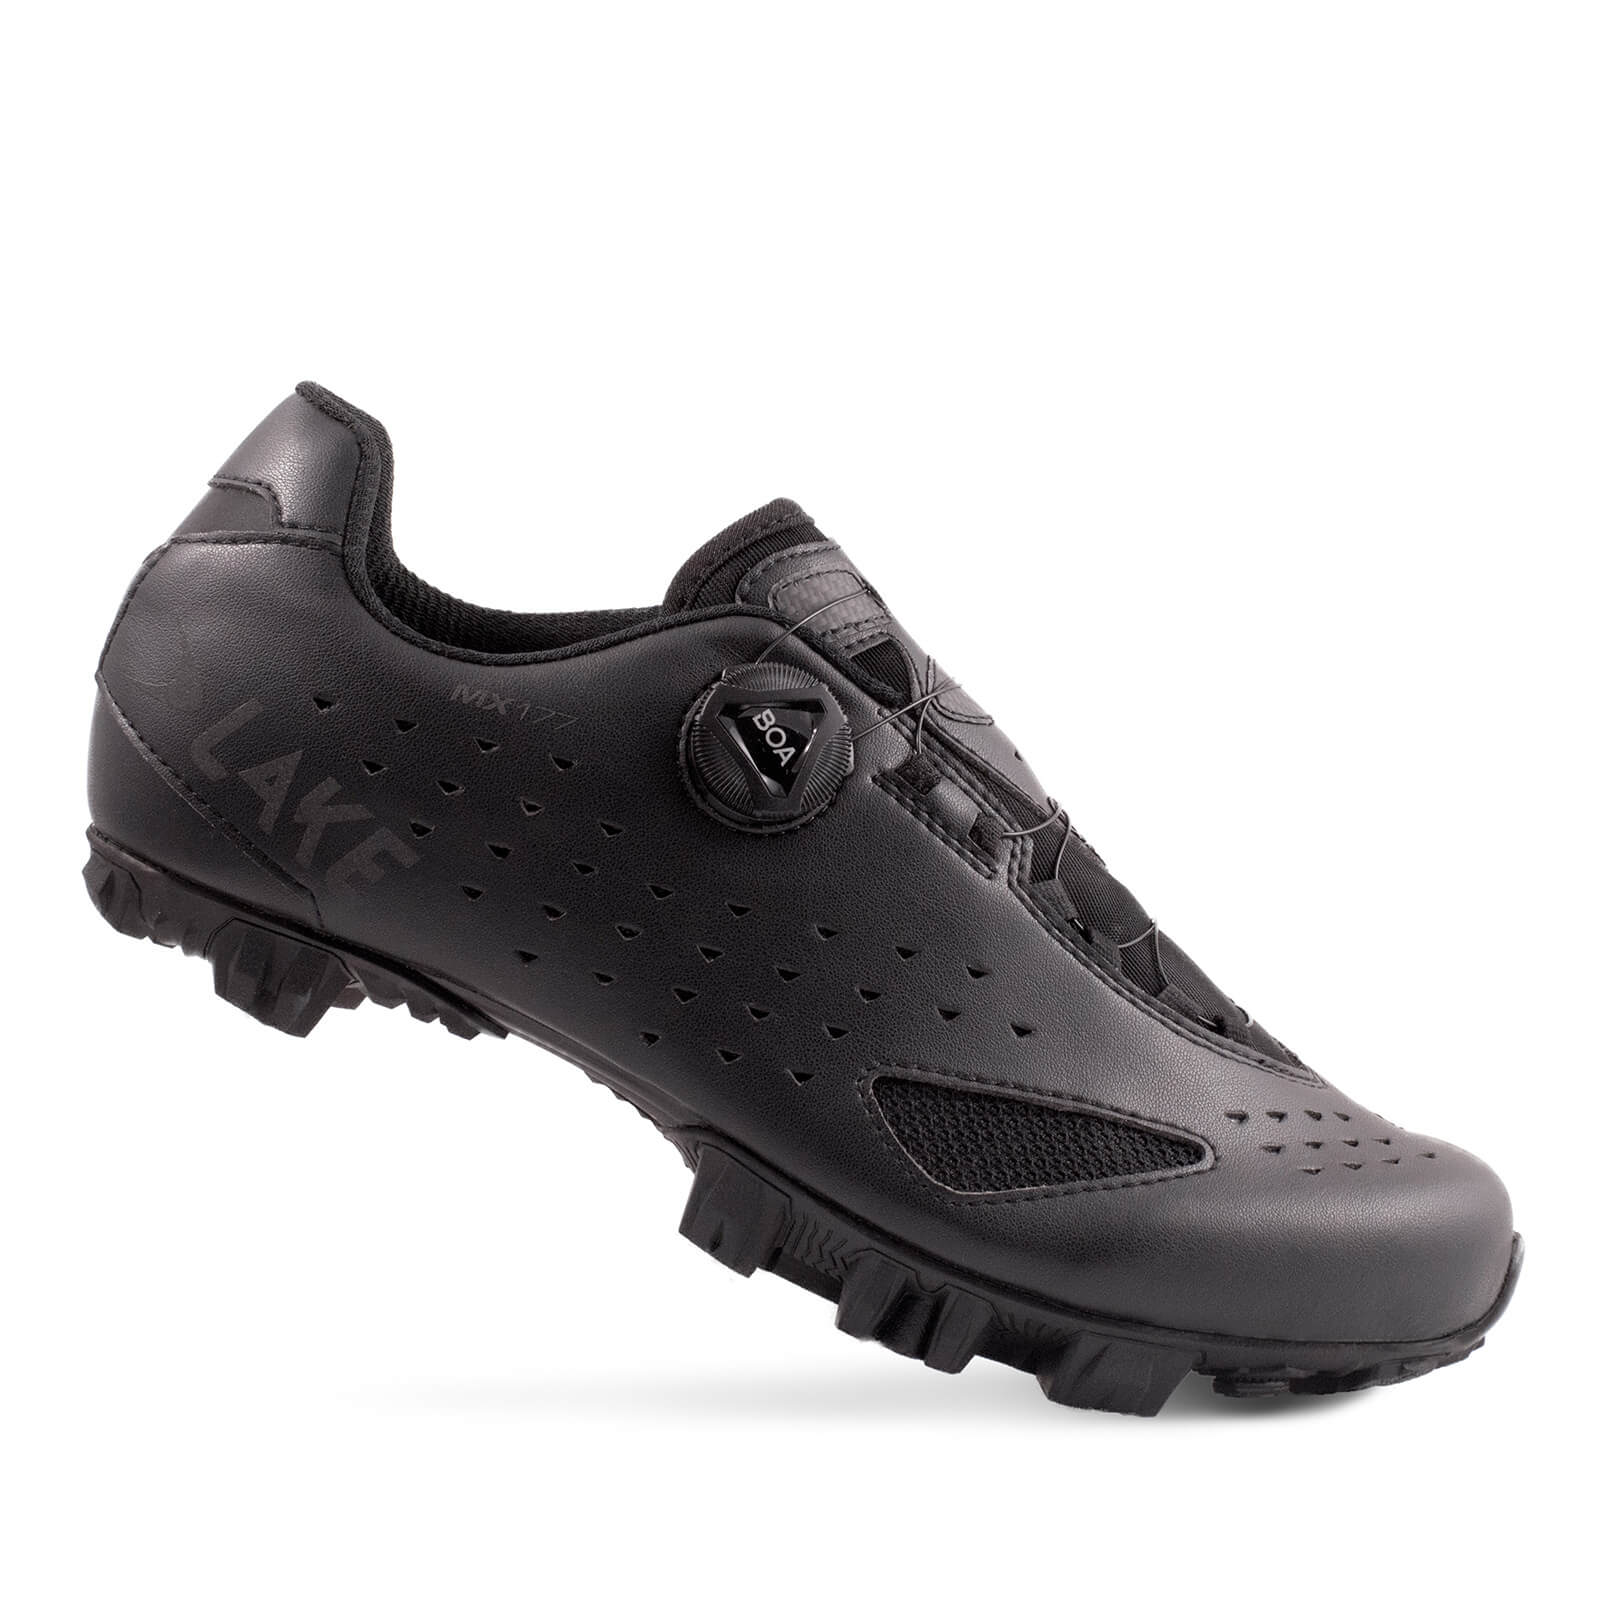 Lake MX177 MTB Shoes - EU41 - Black